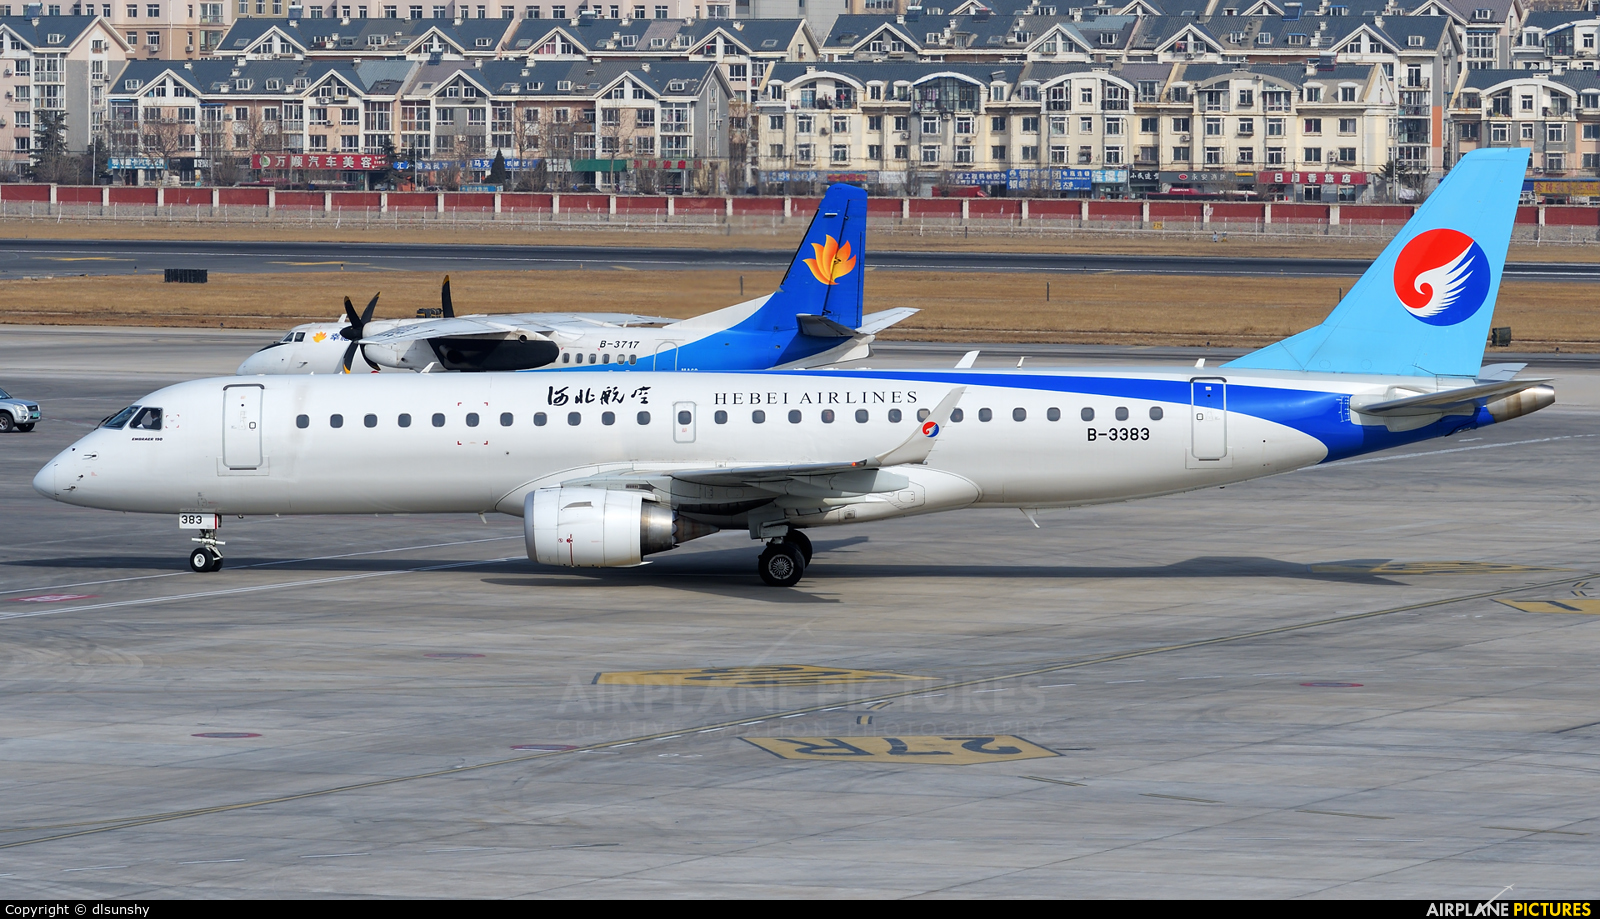 Hebei Airlines B-3383 aircraft at Dalian Zhoushuizi Int'l